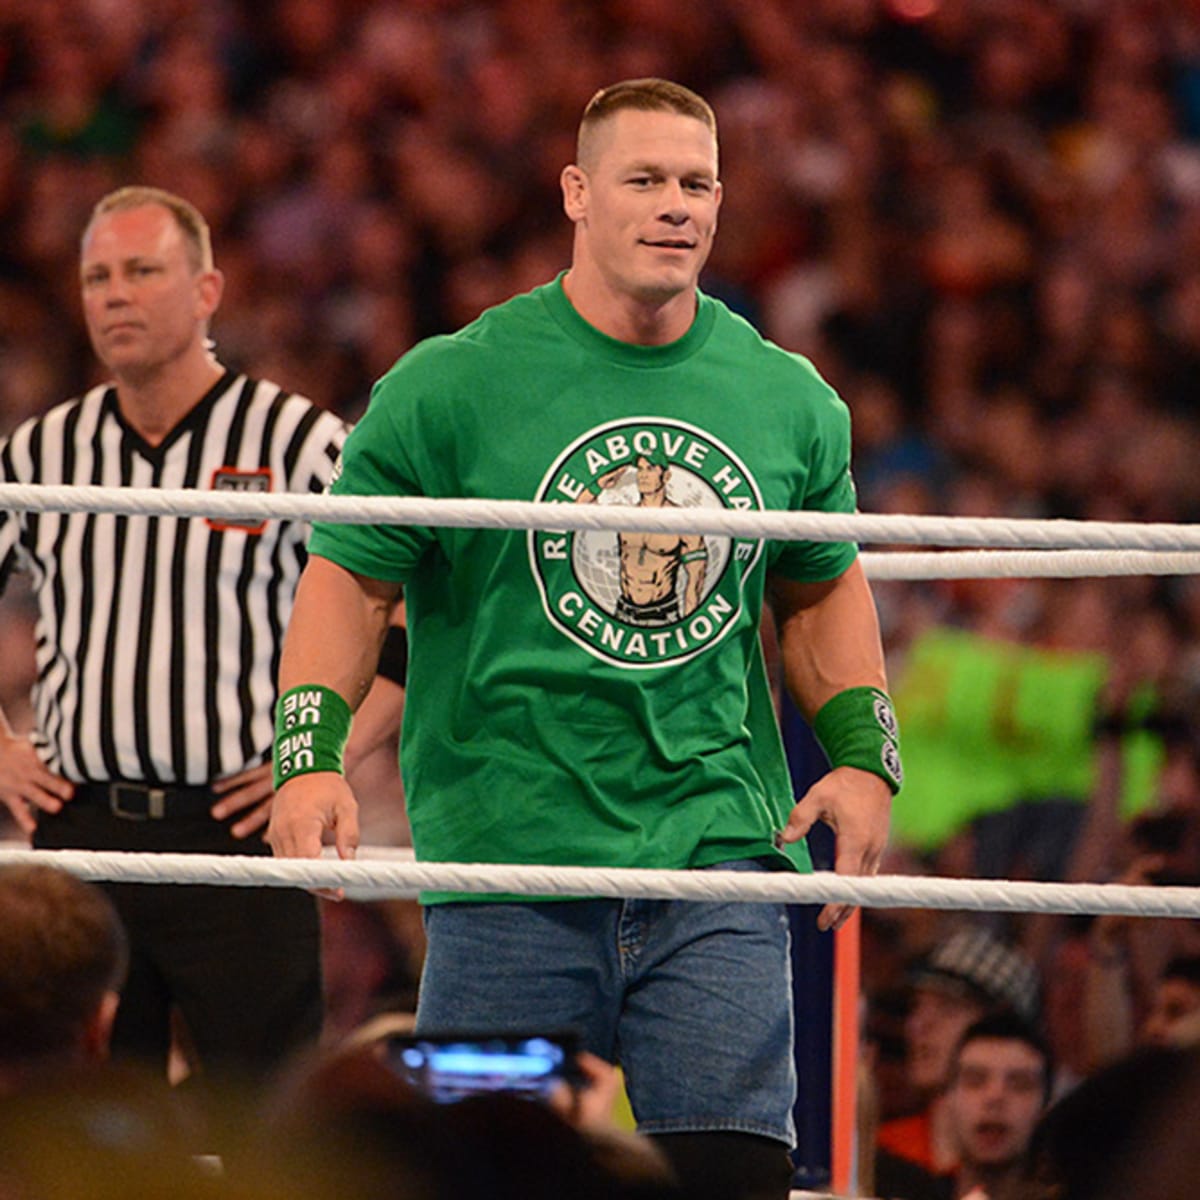 John Cena discusses his WrestleMania proposal to Nikki Bella